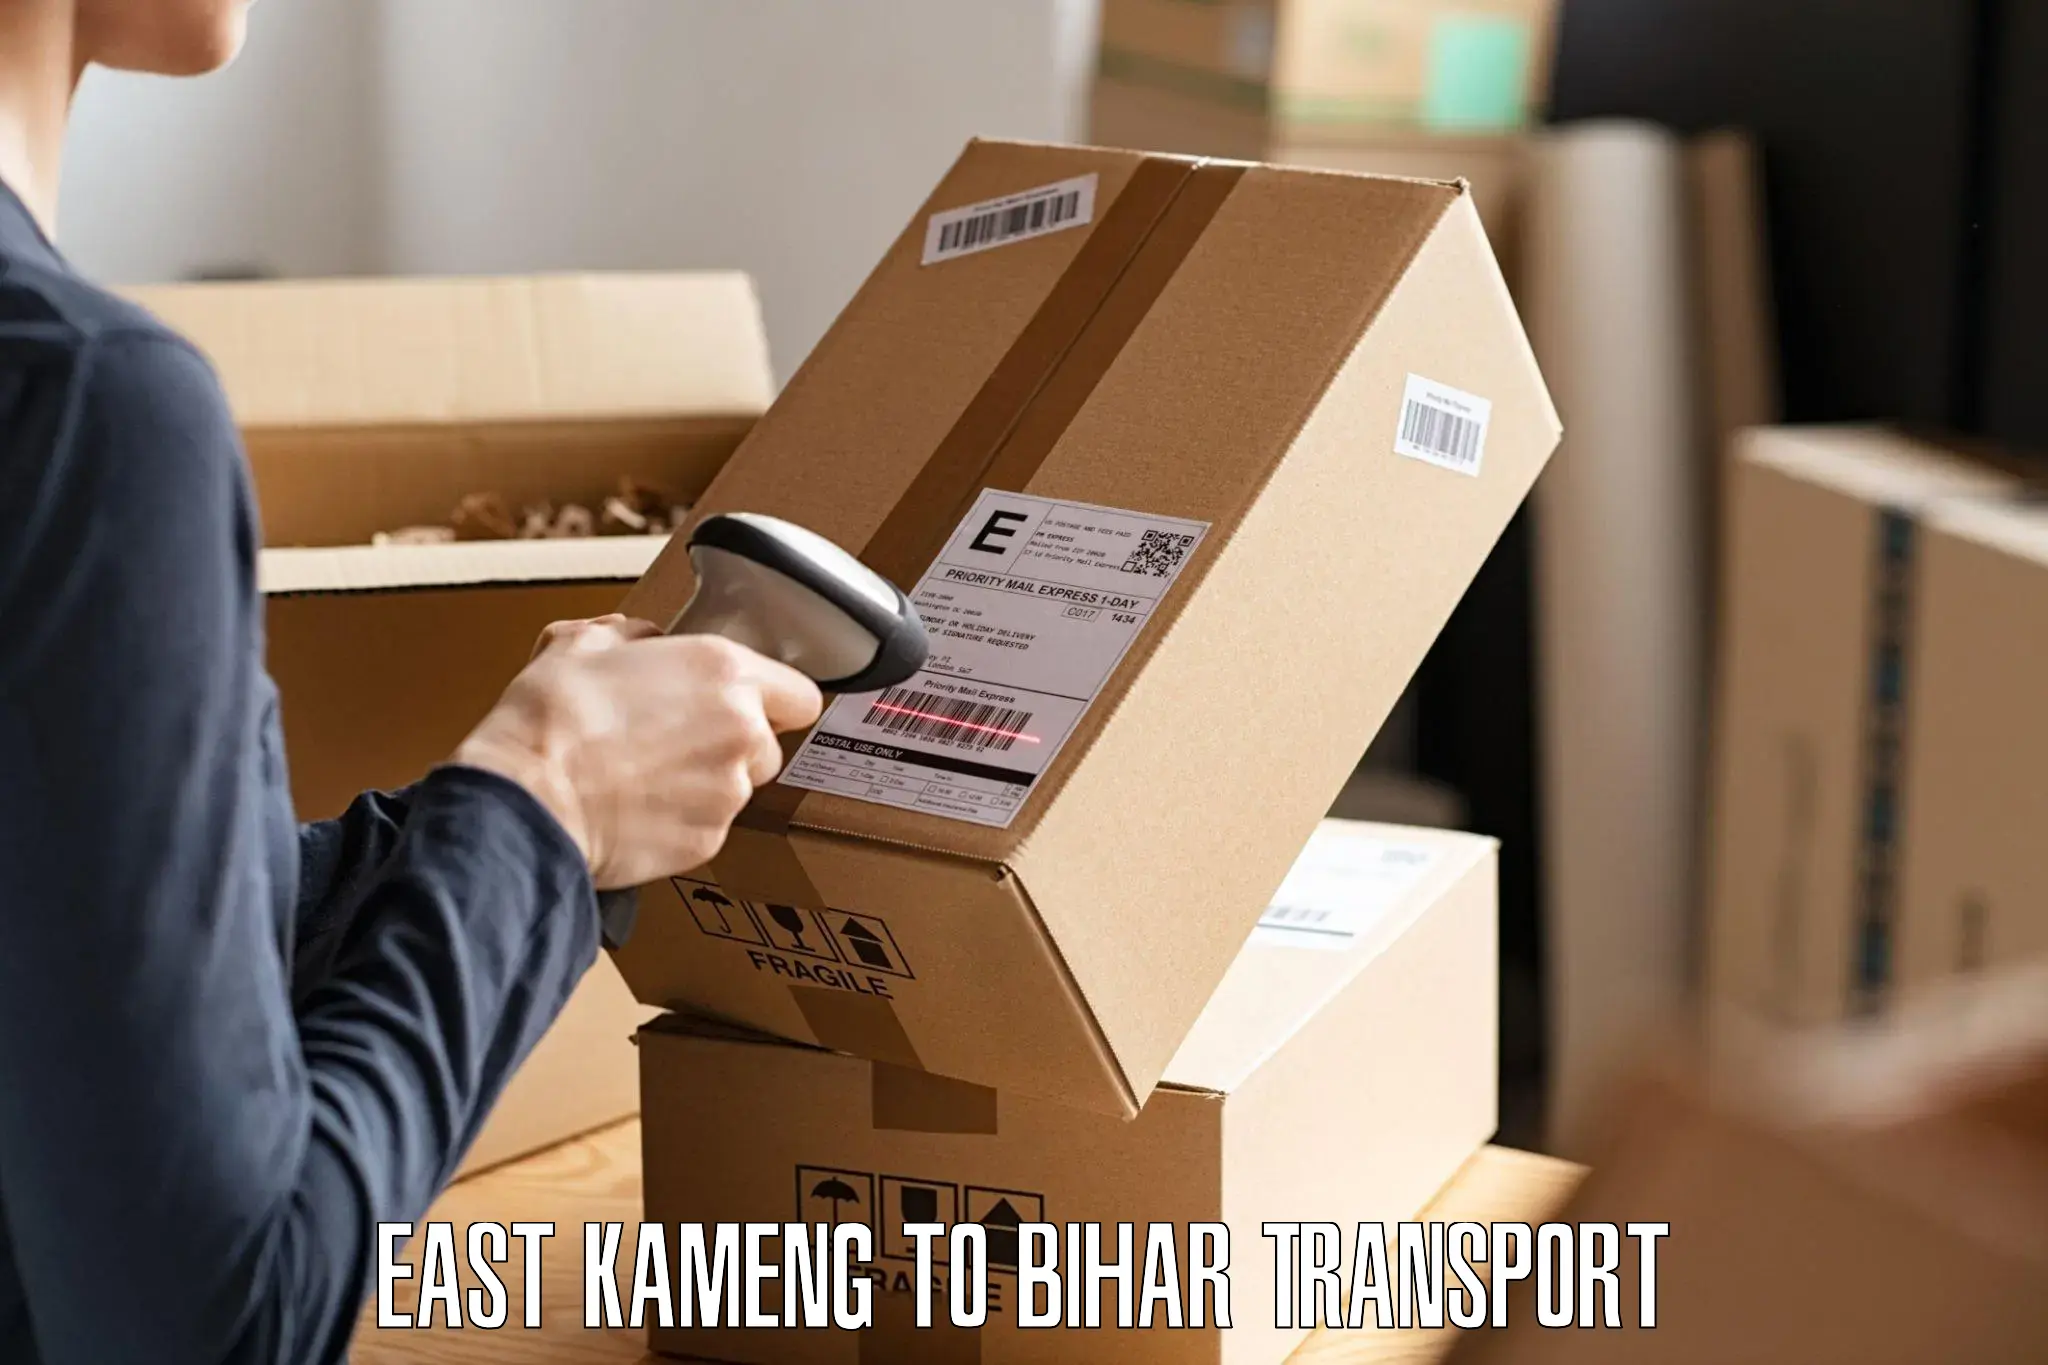 Daily transport service East Kameng to Katoria